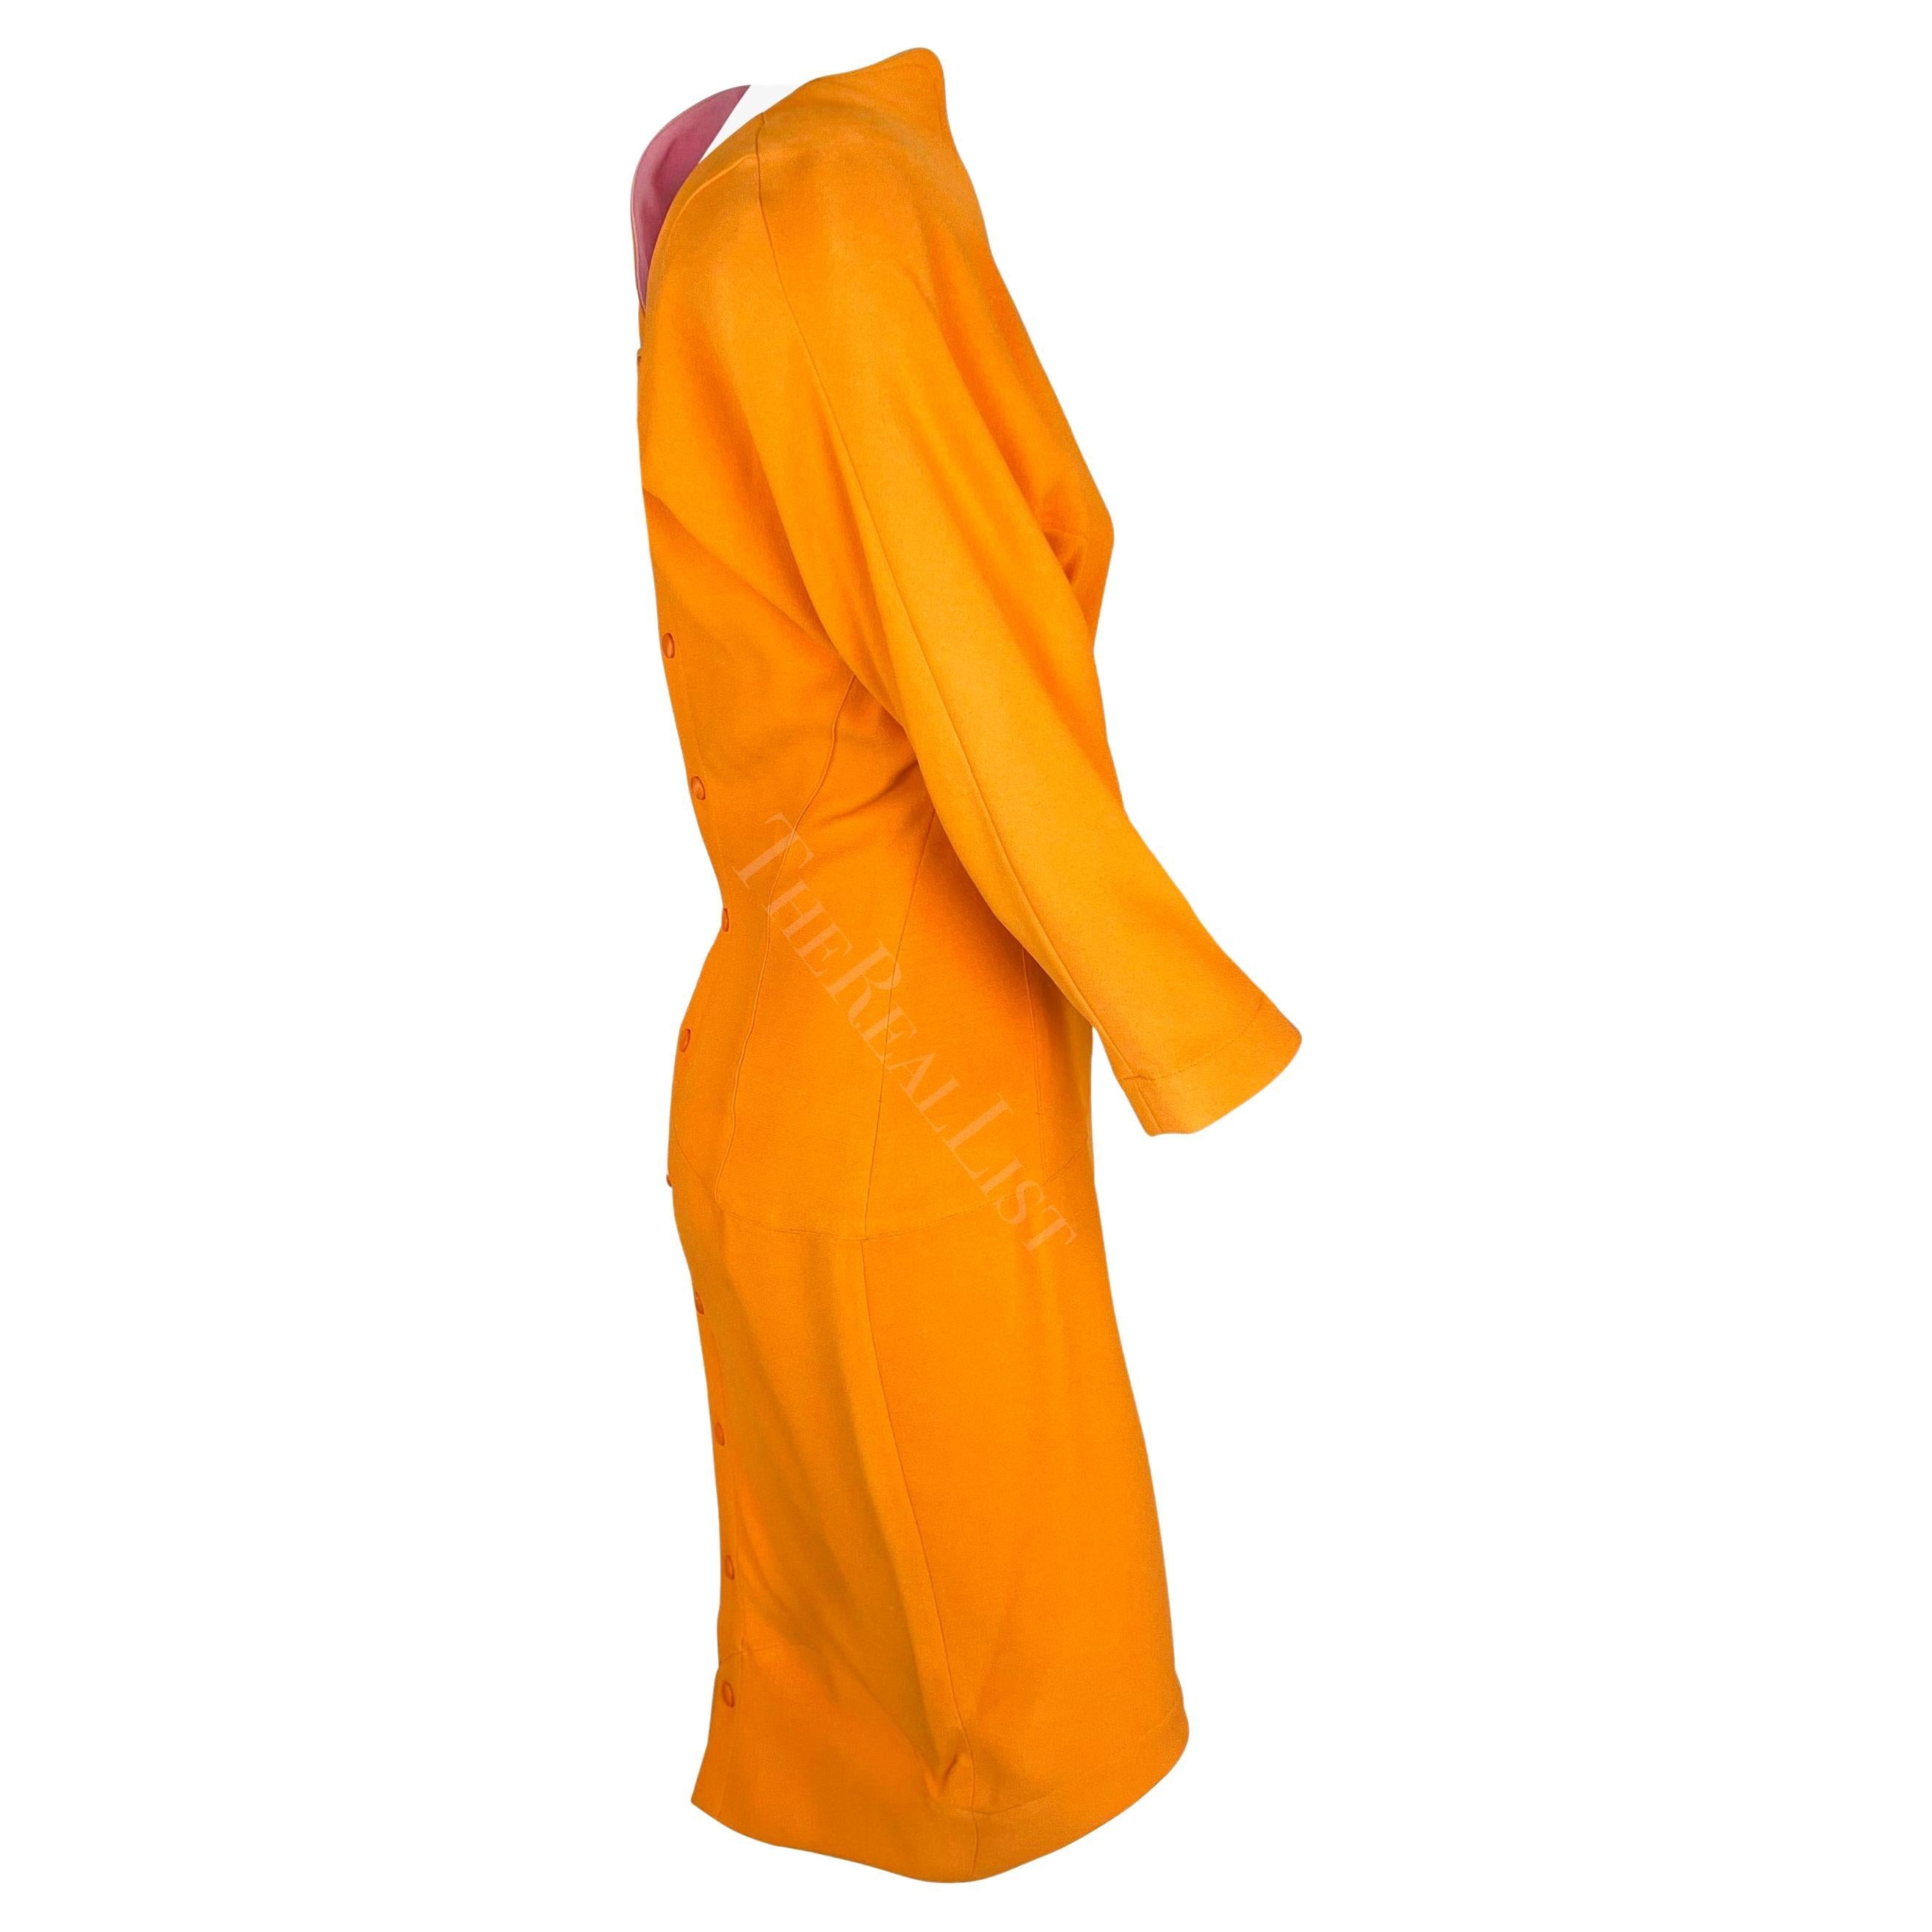 Robe Sahara sculpturale orange, défilé Thierry Mugler S/S 1988 en vente 4